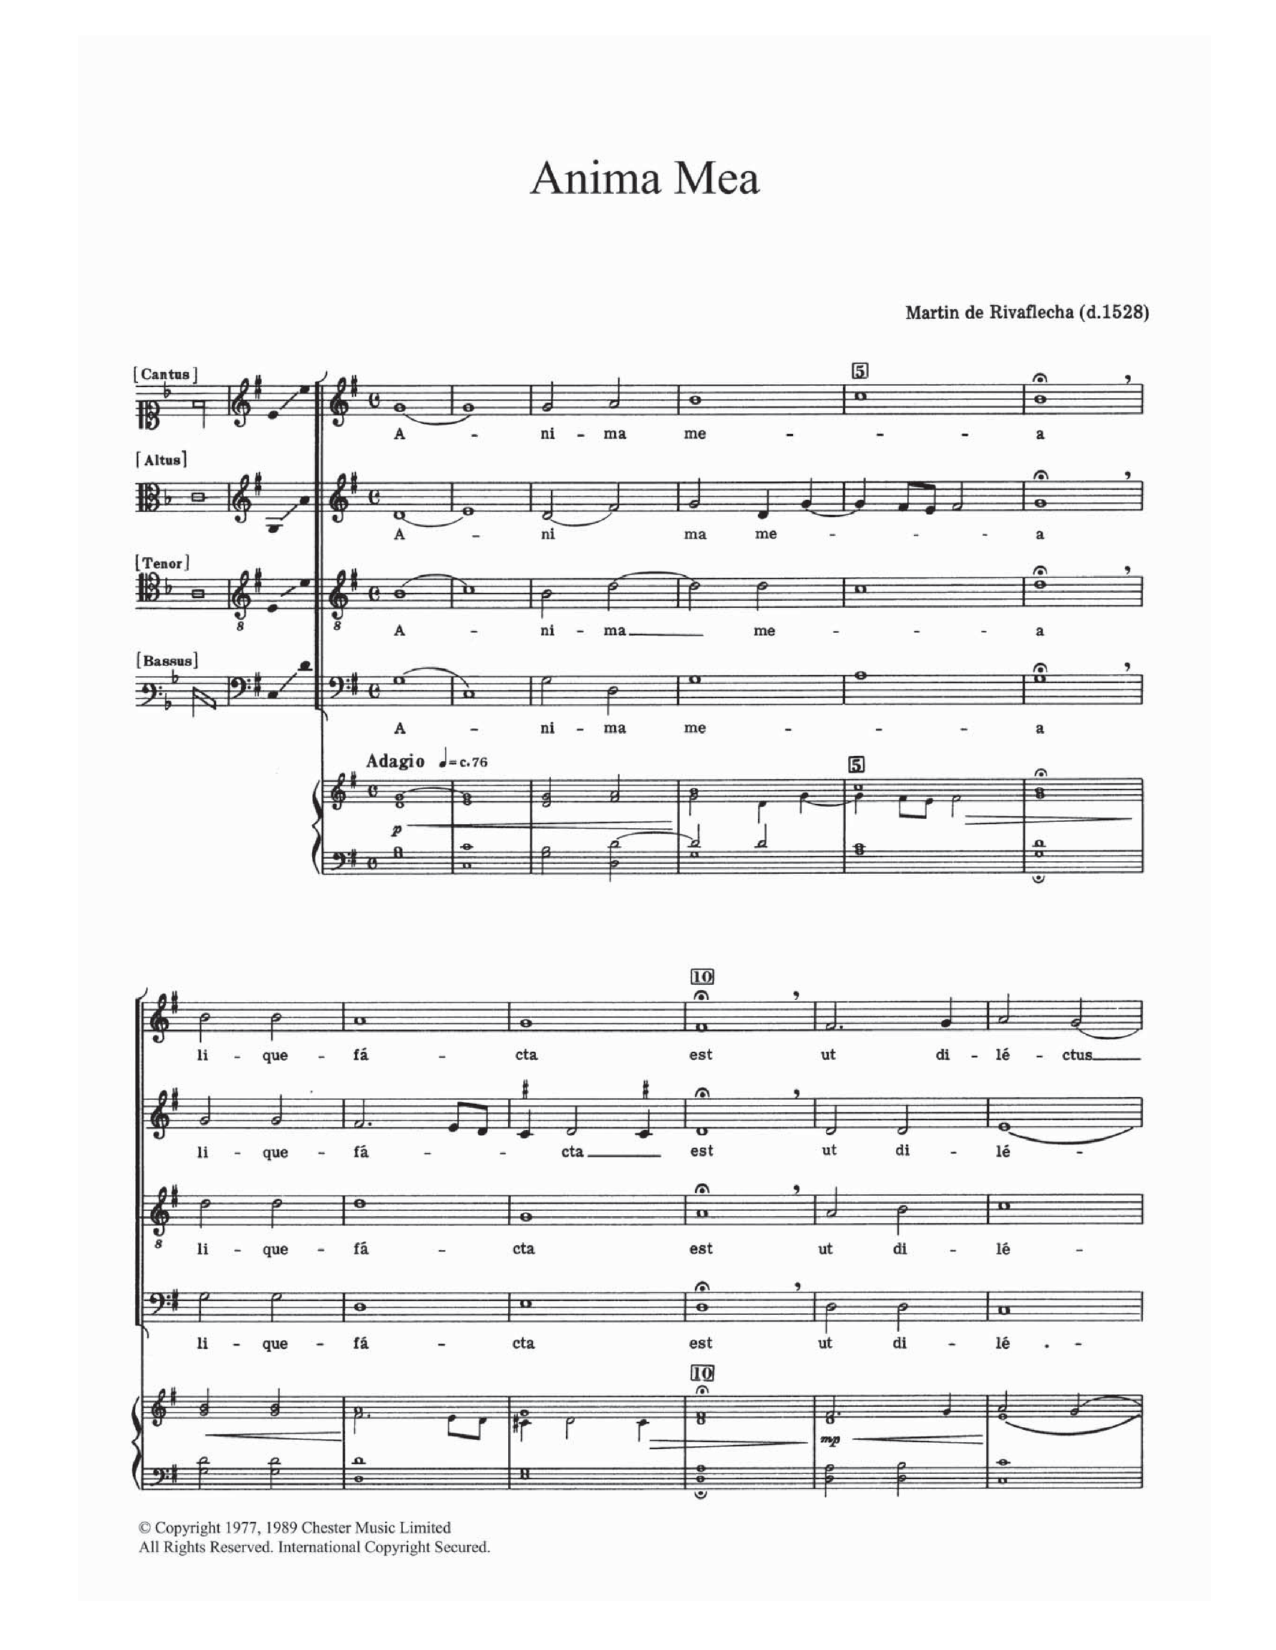 Martin de Rivaflecha Anima Mea Sheet Music Notes & Chords for SATB - Download or Print PDF